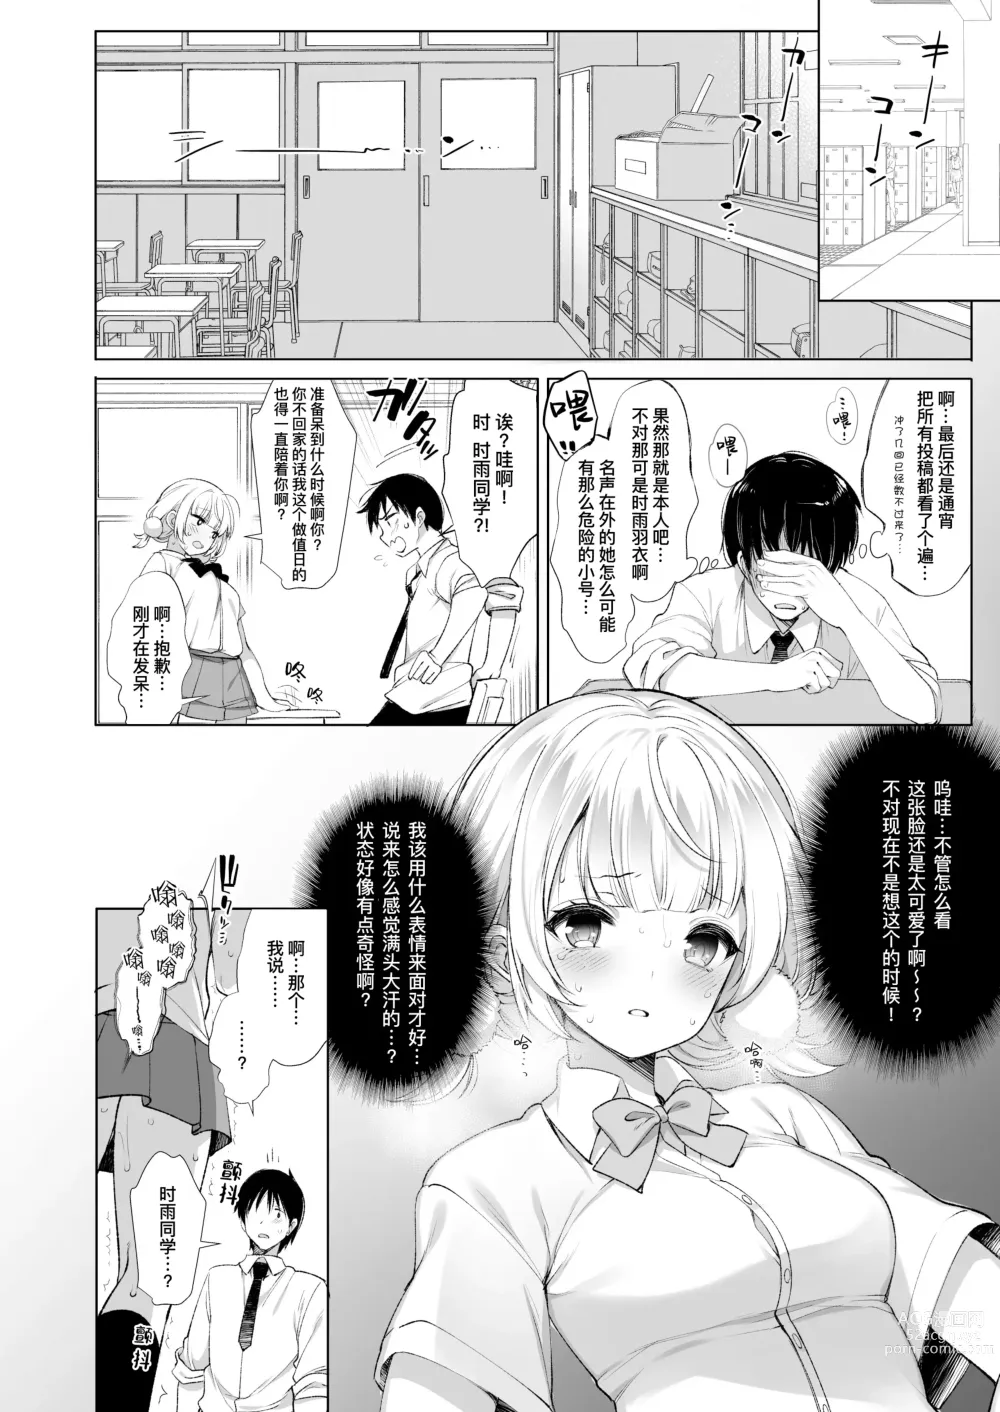 Page 11 of doujinshi 偶像主播时雨羽衣的秘密视频发布2